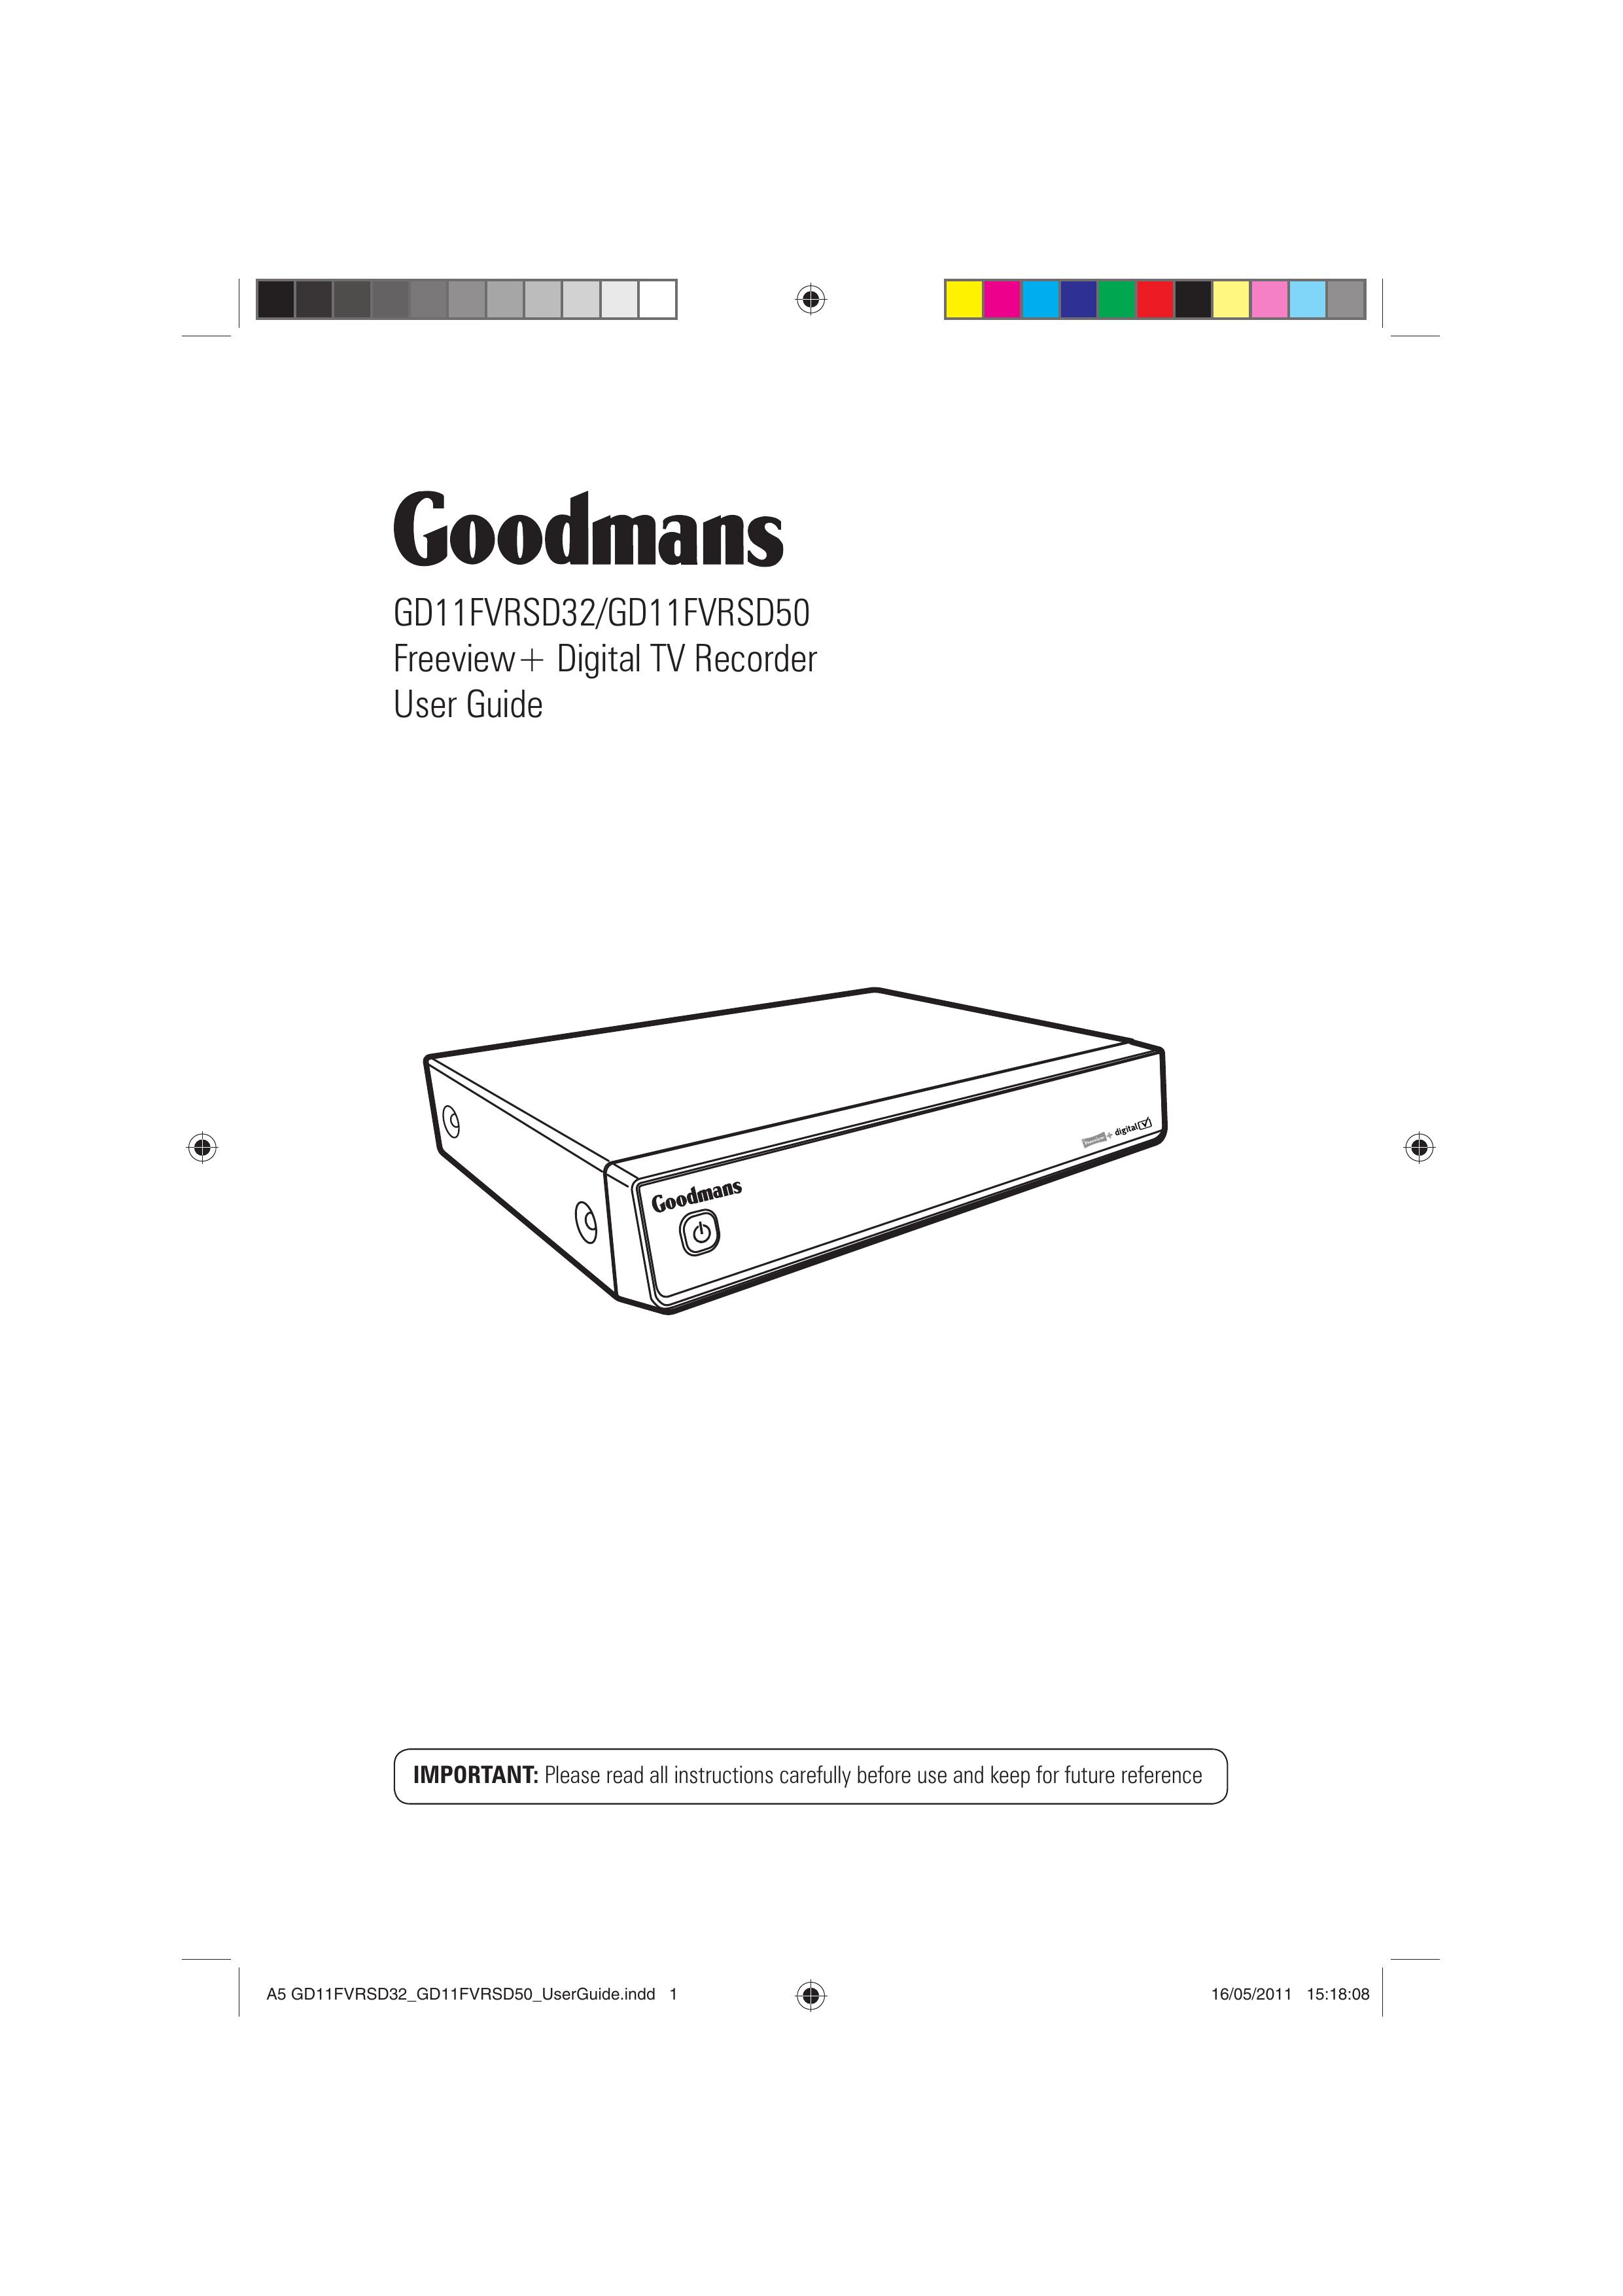 Goodmans GD11FVRSD50 Digital Camera User Manual